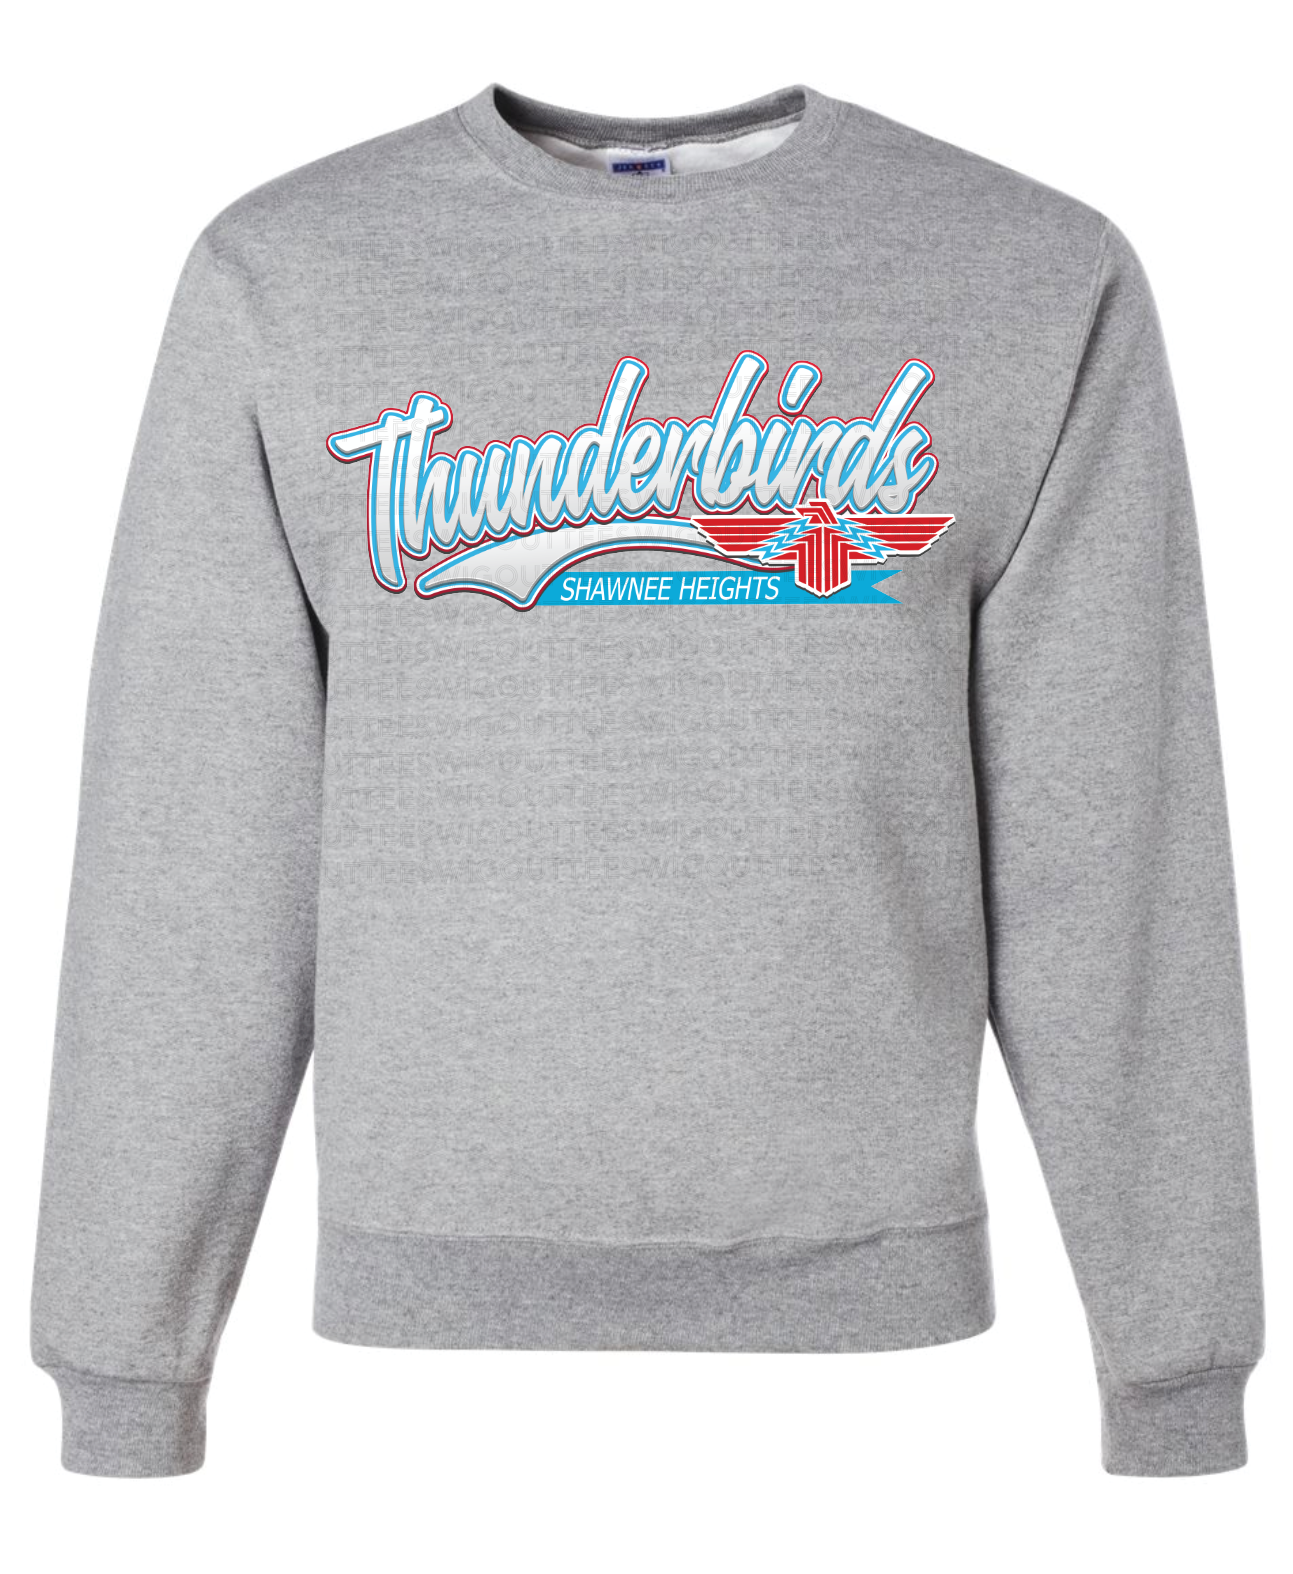 Thunderbirds at SHES Crew Sweatshirt